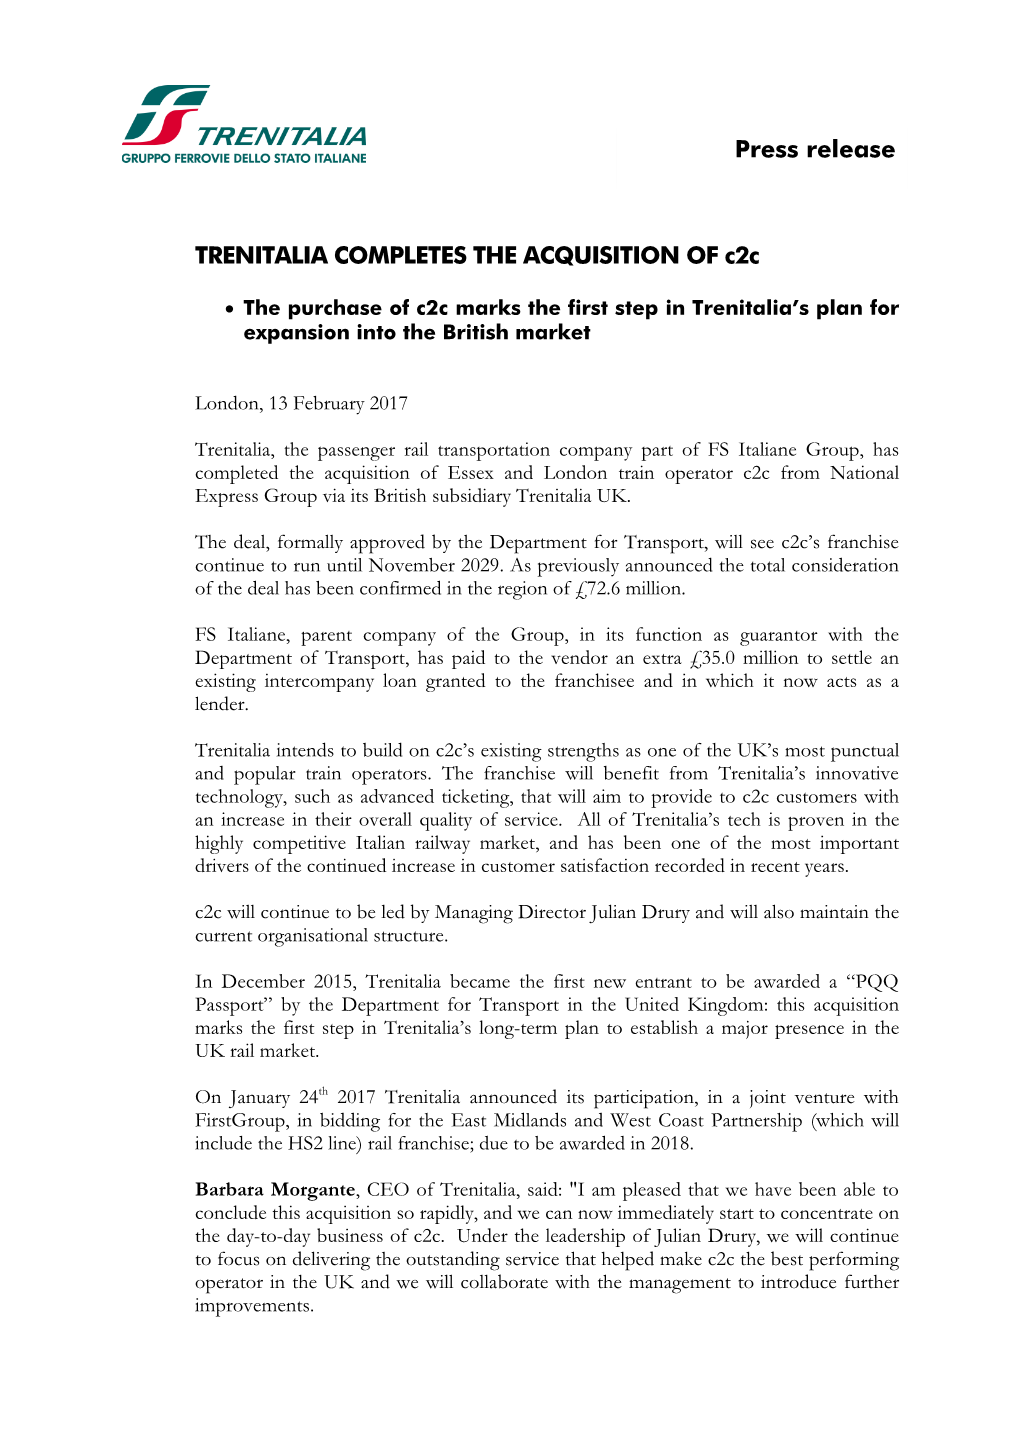 TRENITALIA COMPLETES the ACQUISITION of C2c